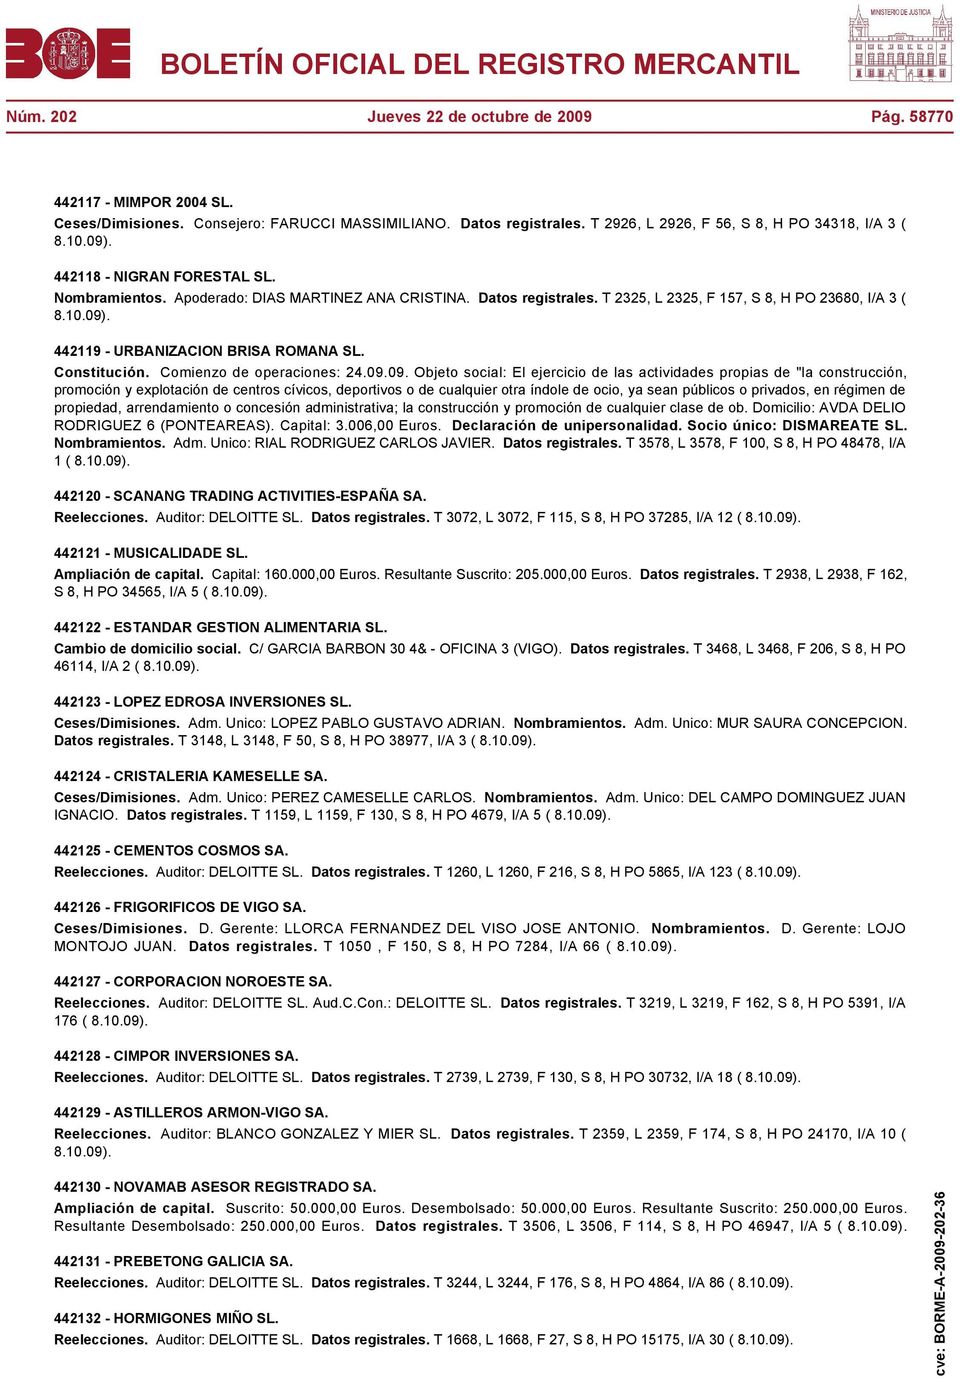 T 2325, L 2325, F 157, S 8, H PO 23680, I/A 3 ( 442119 - URBANIZACION BRISA ROMANA SL. Constitución. Comienzo de operaciones: 24.09.